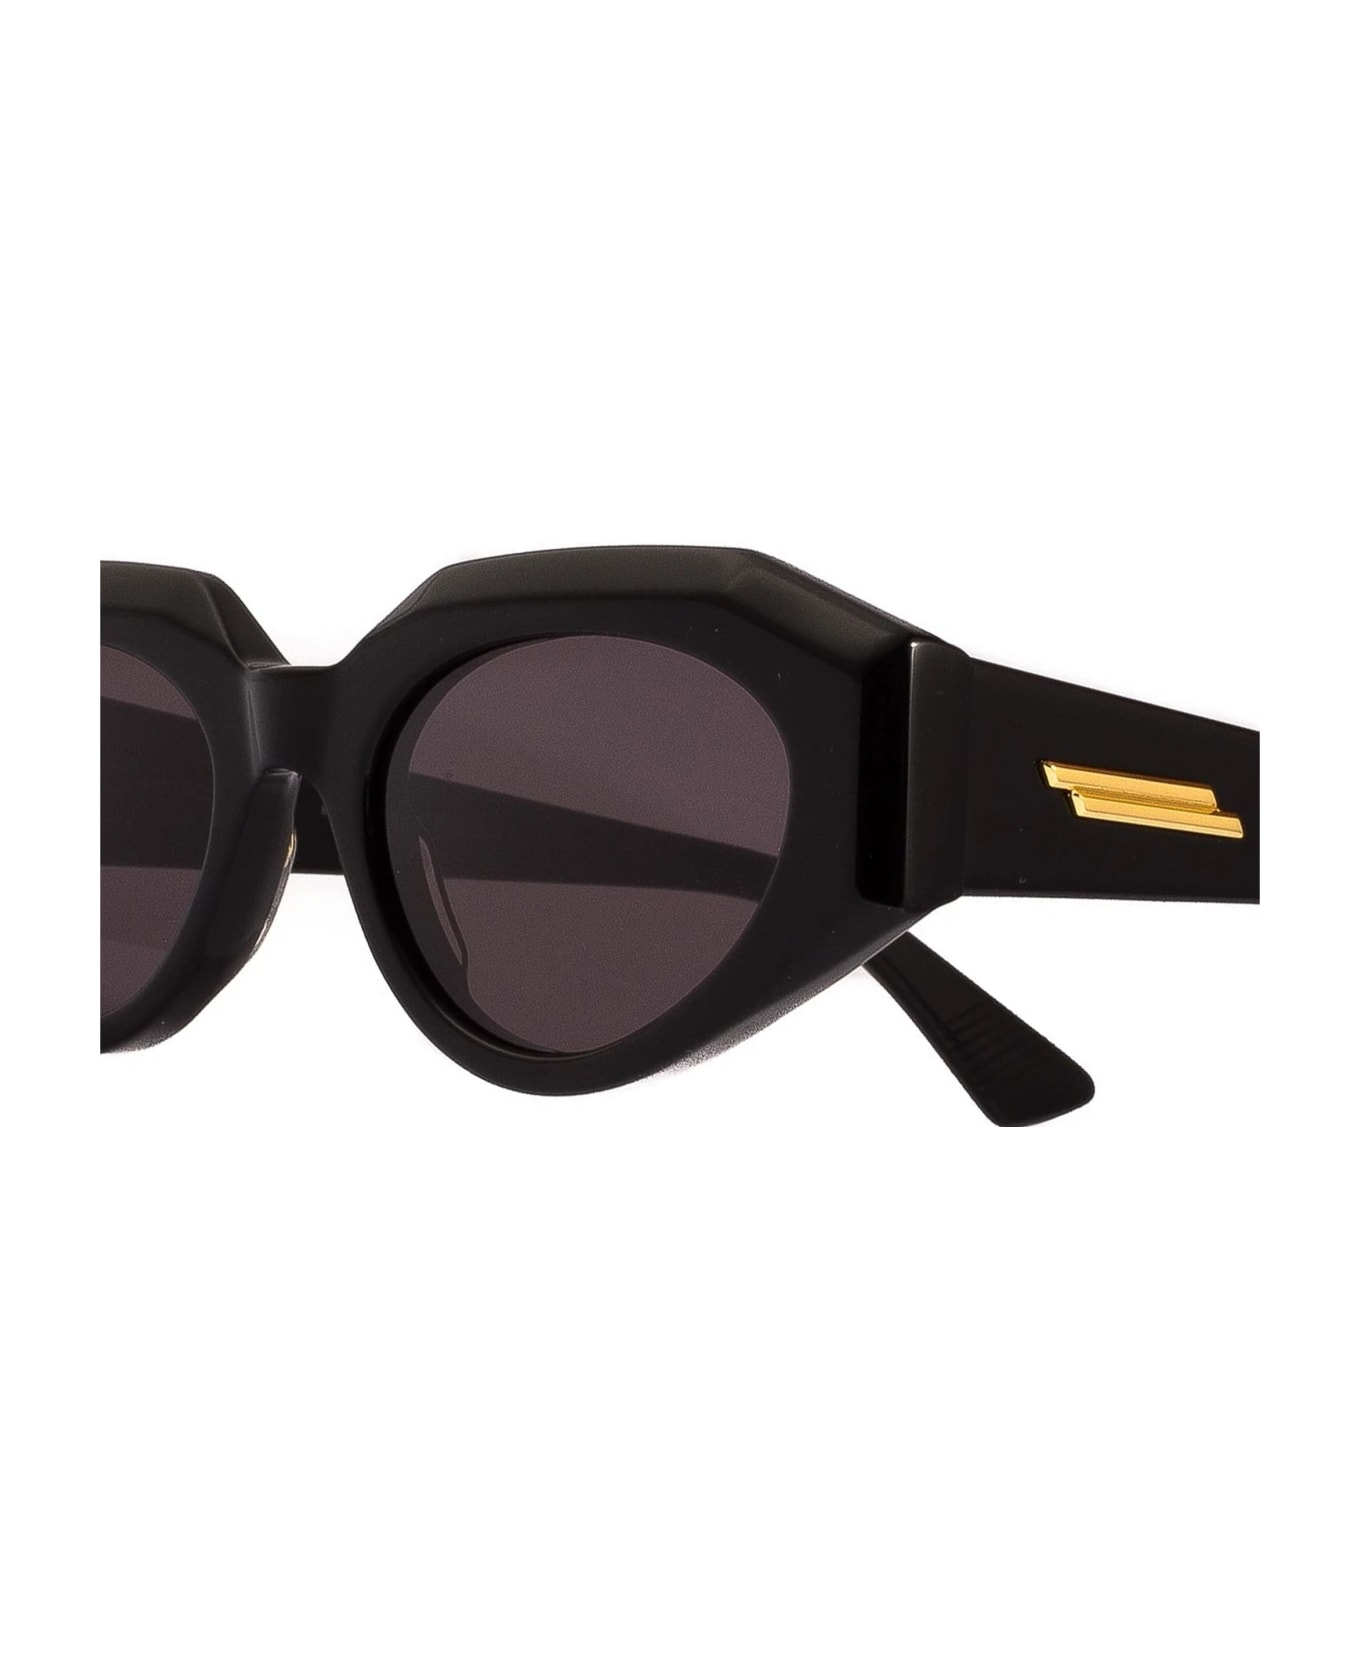 Bottega Veneta Eyewear Bv1031s-001 - Black Sunglasses - Black サングラス